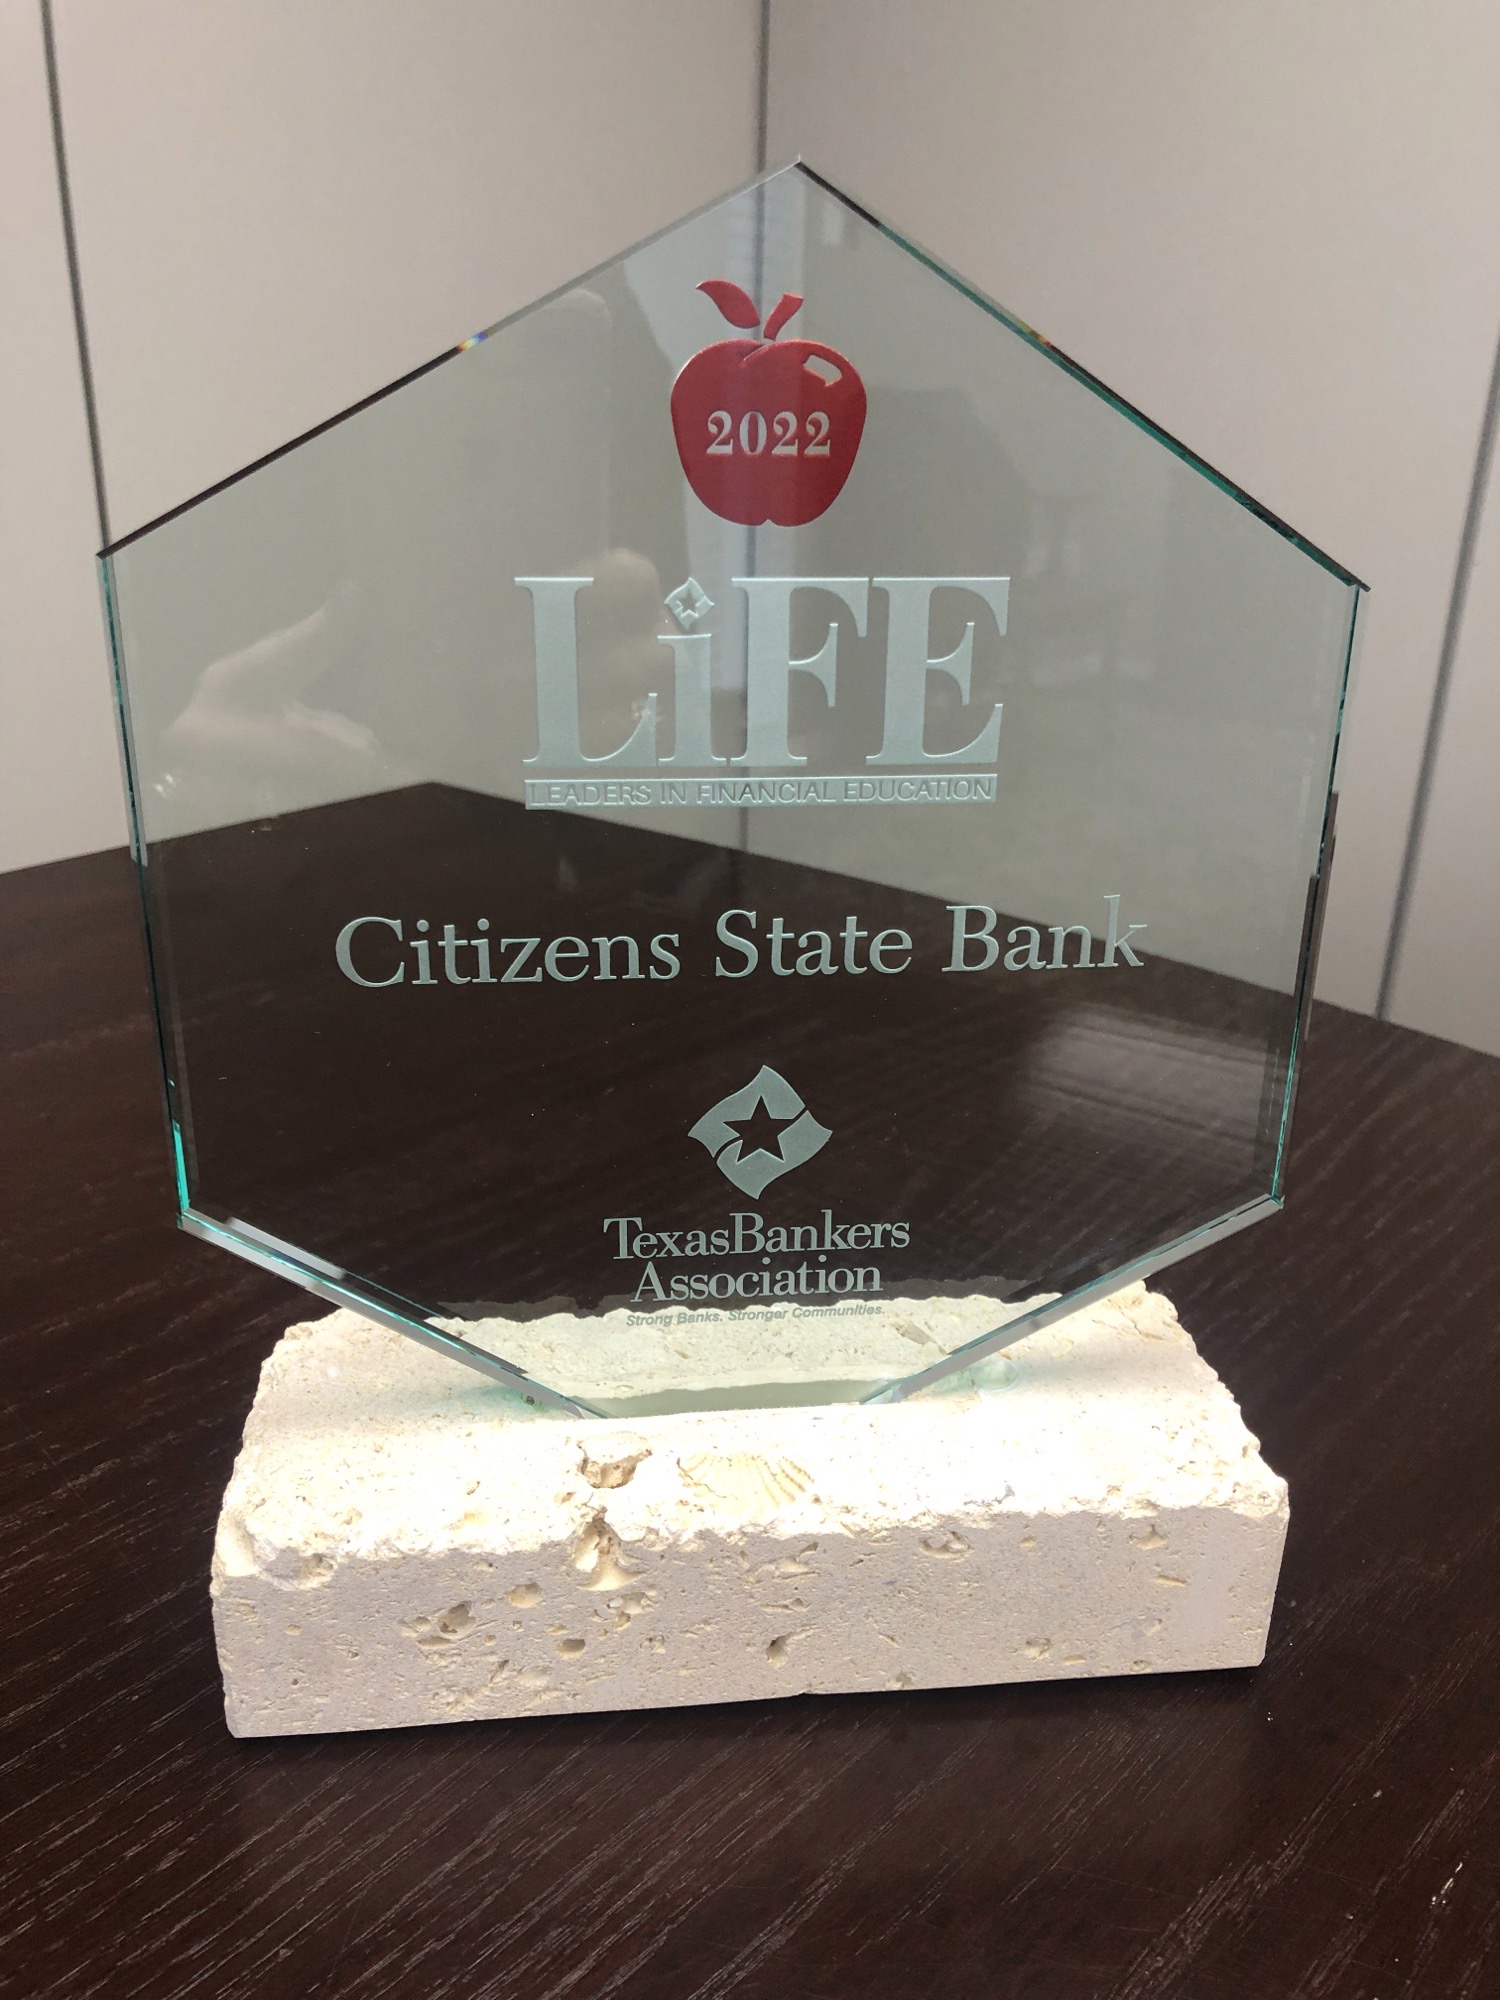 Citizens State Bank award